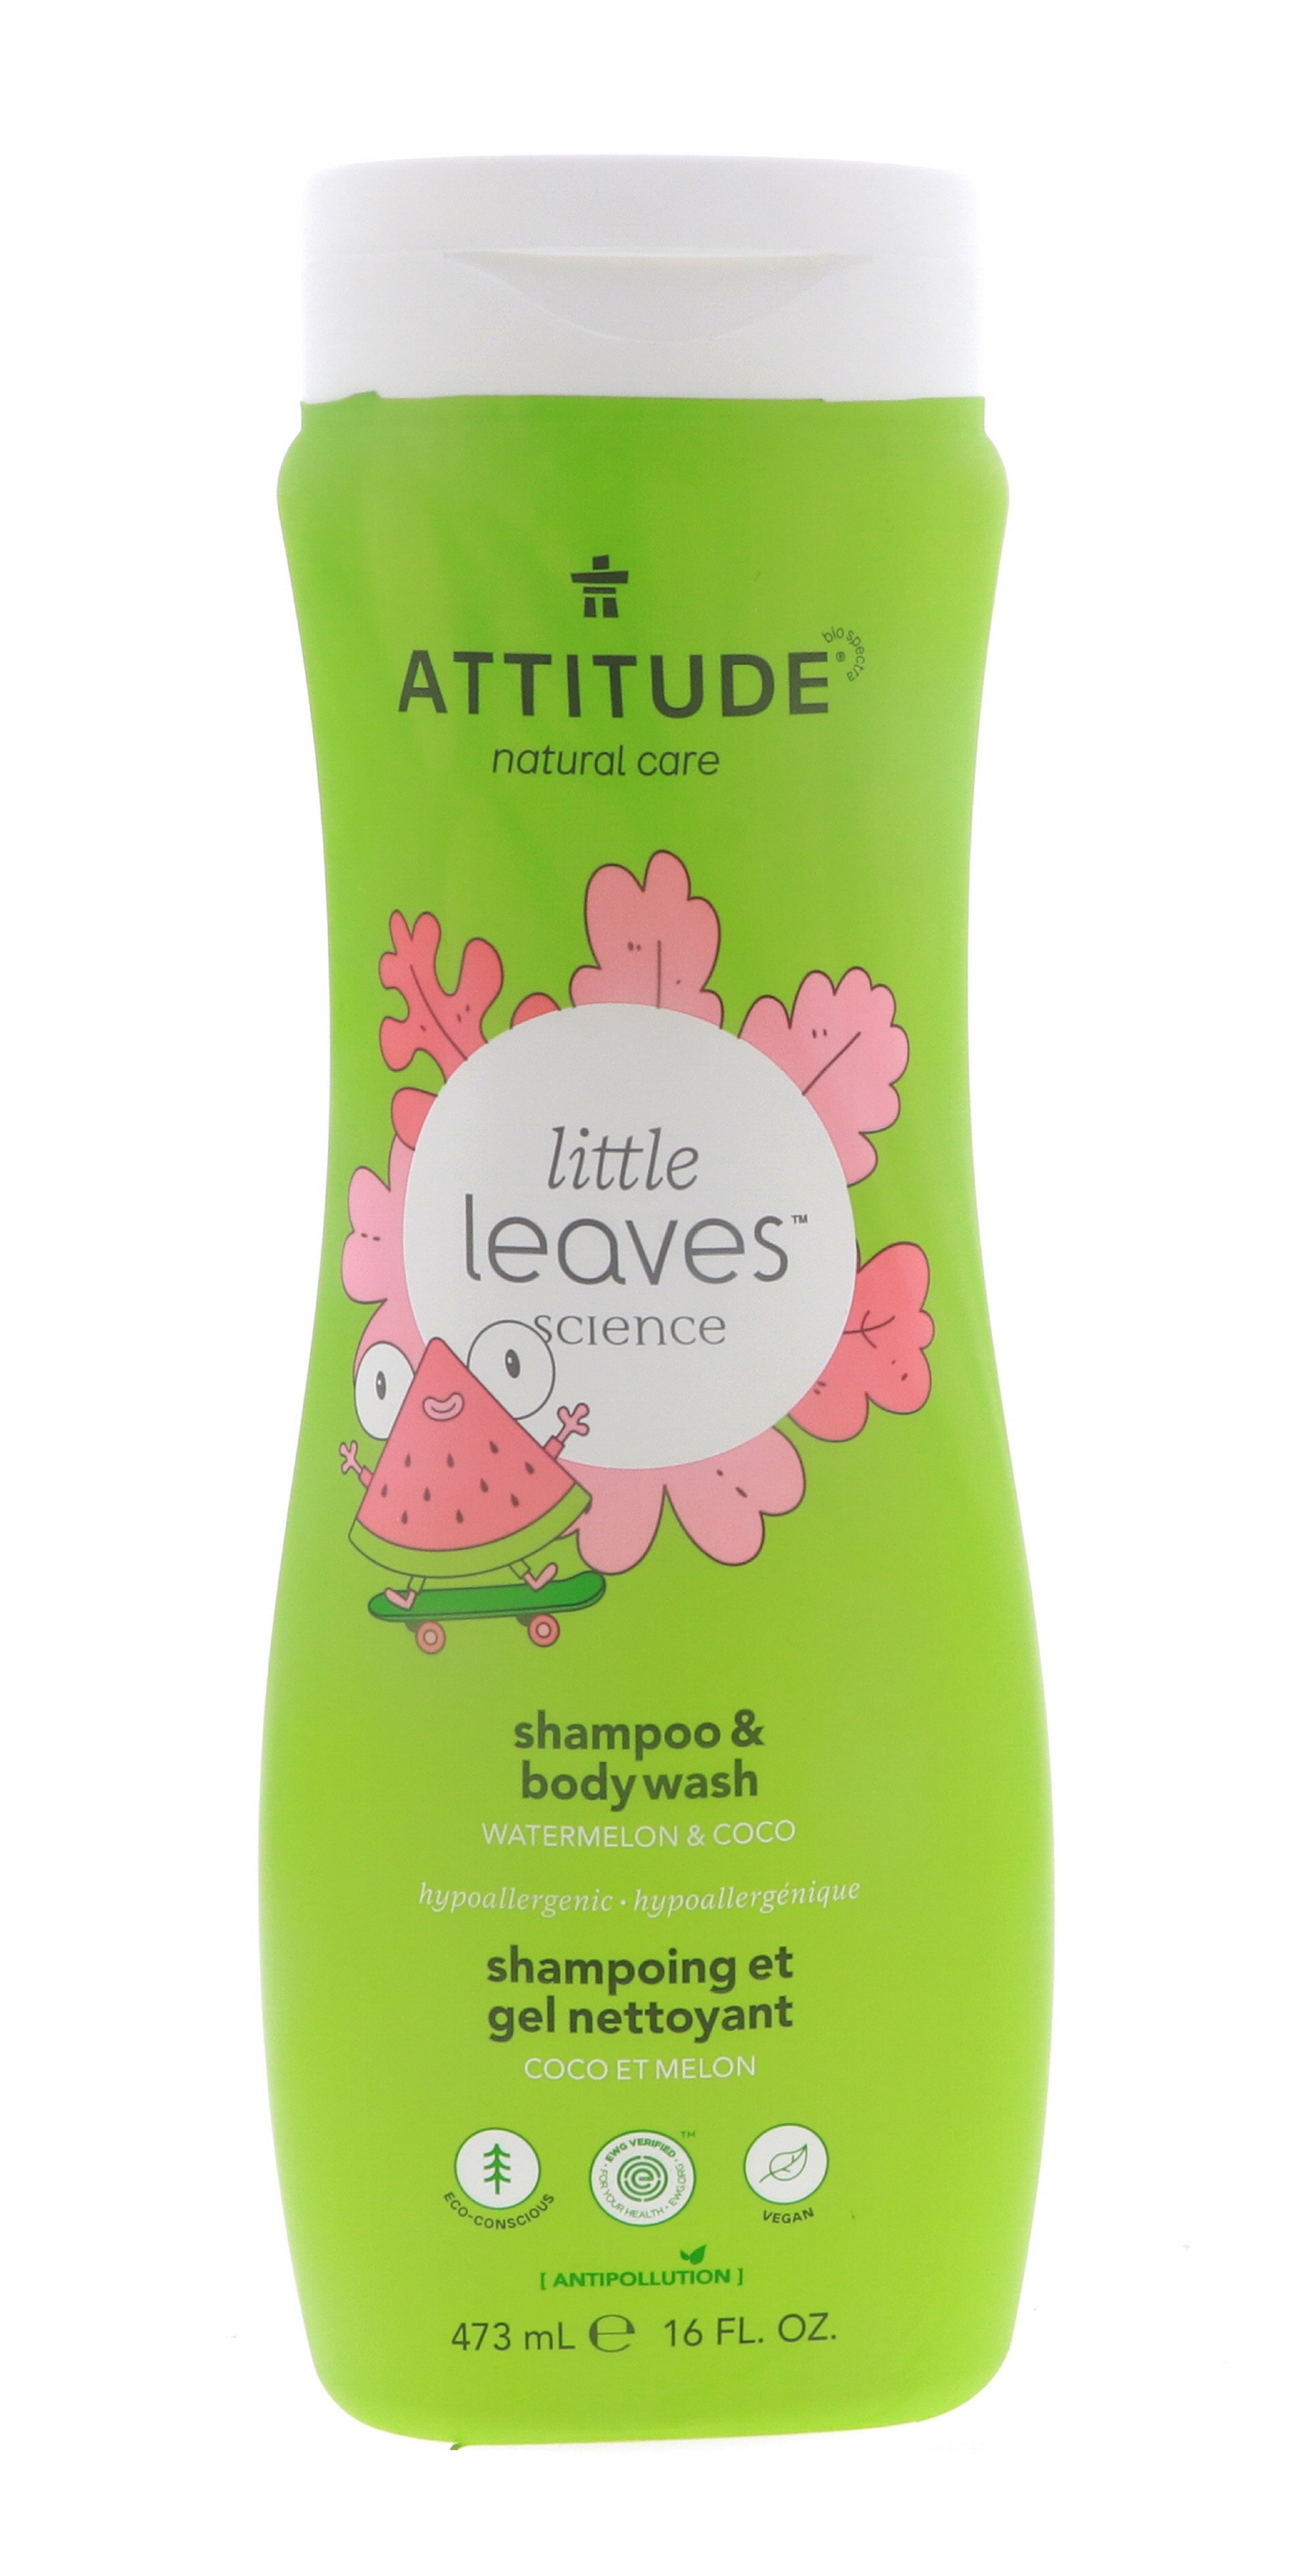 Attitude Little Leaves Watermelon & Coco Shampoo & Body Wash Bottle